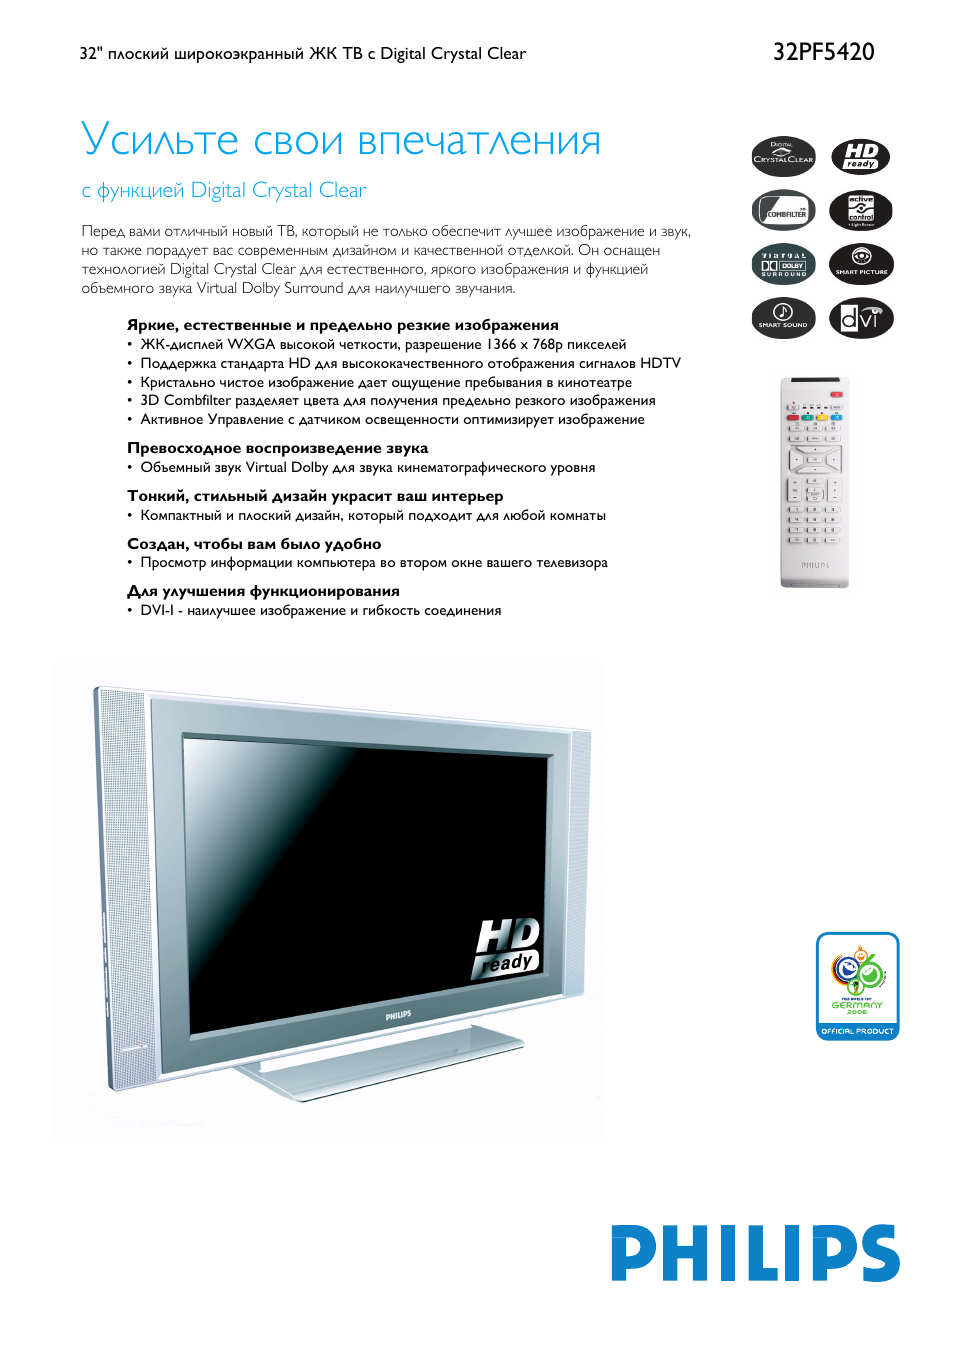 Manual philips 26pf3320 lcd television